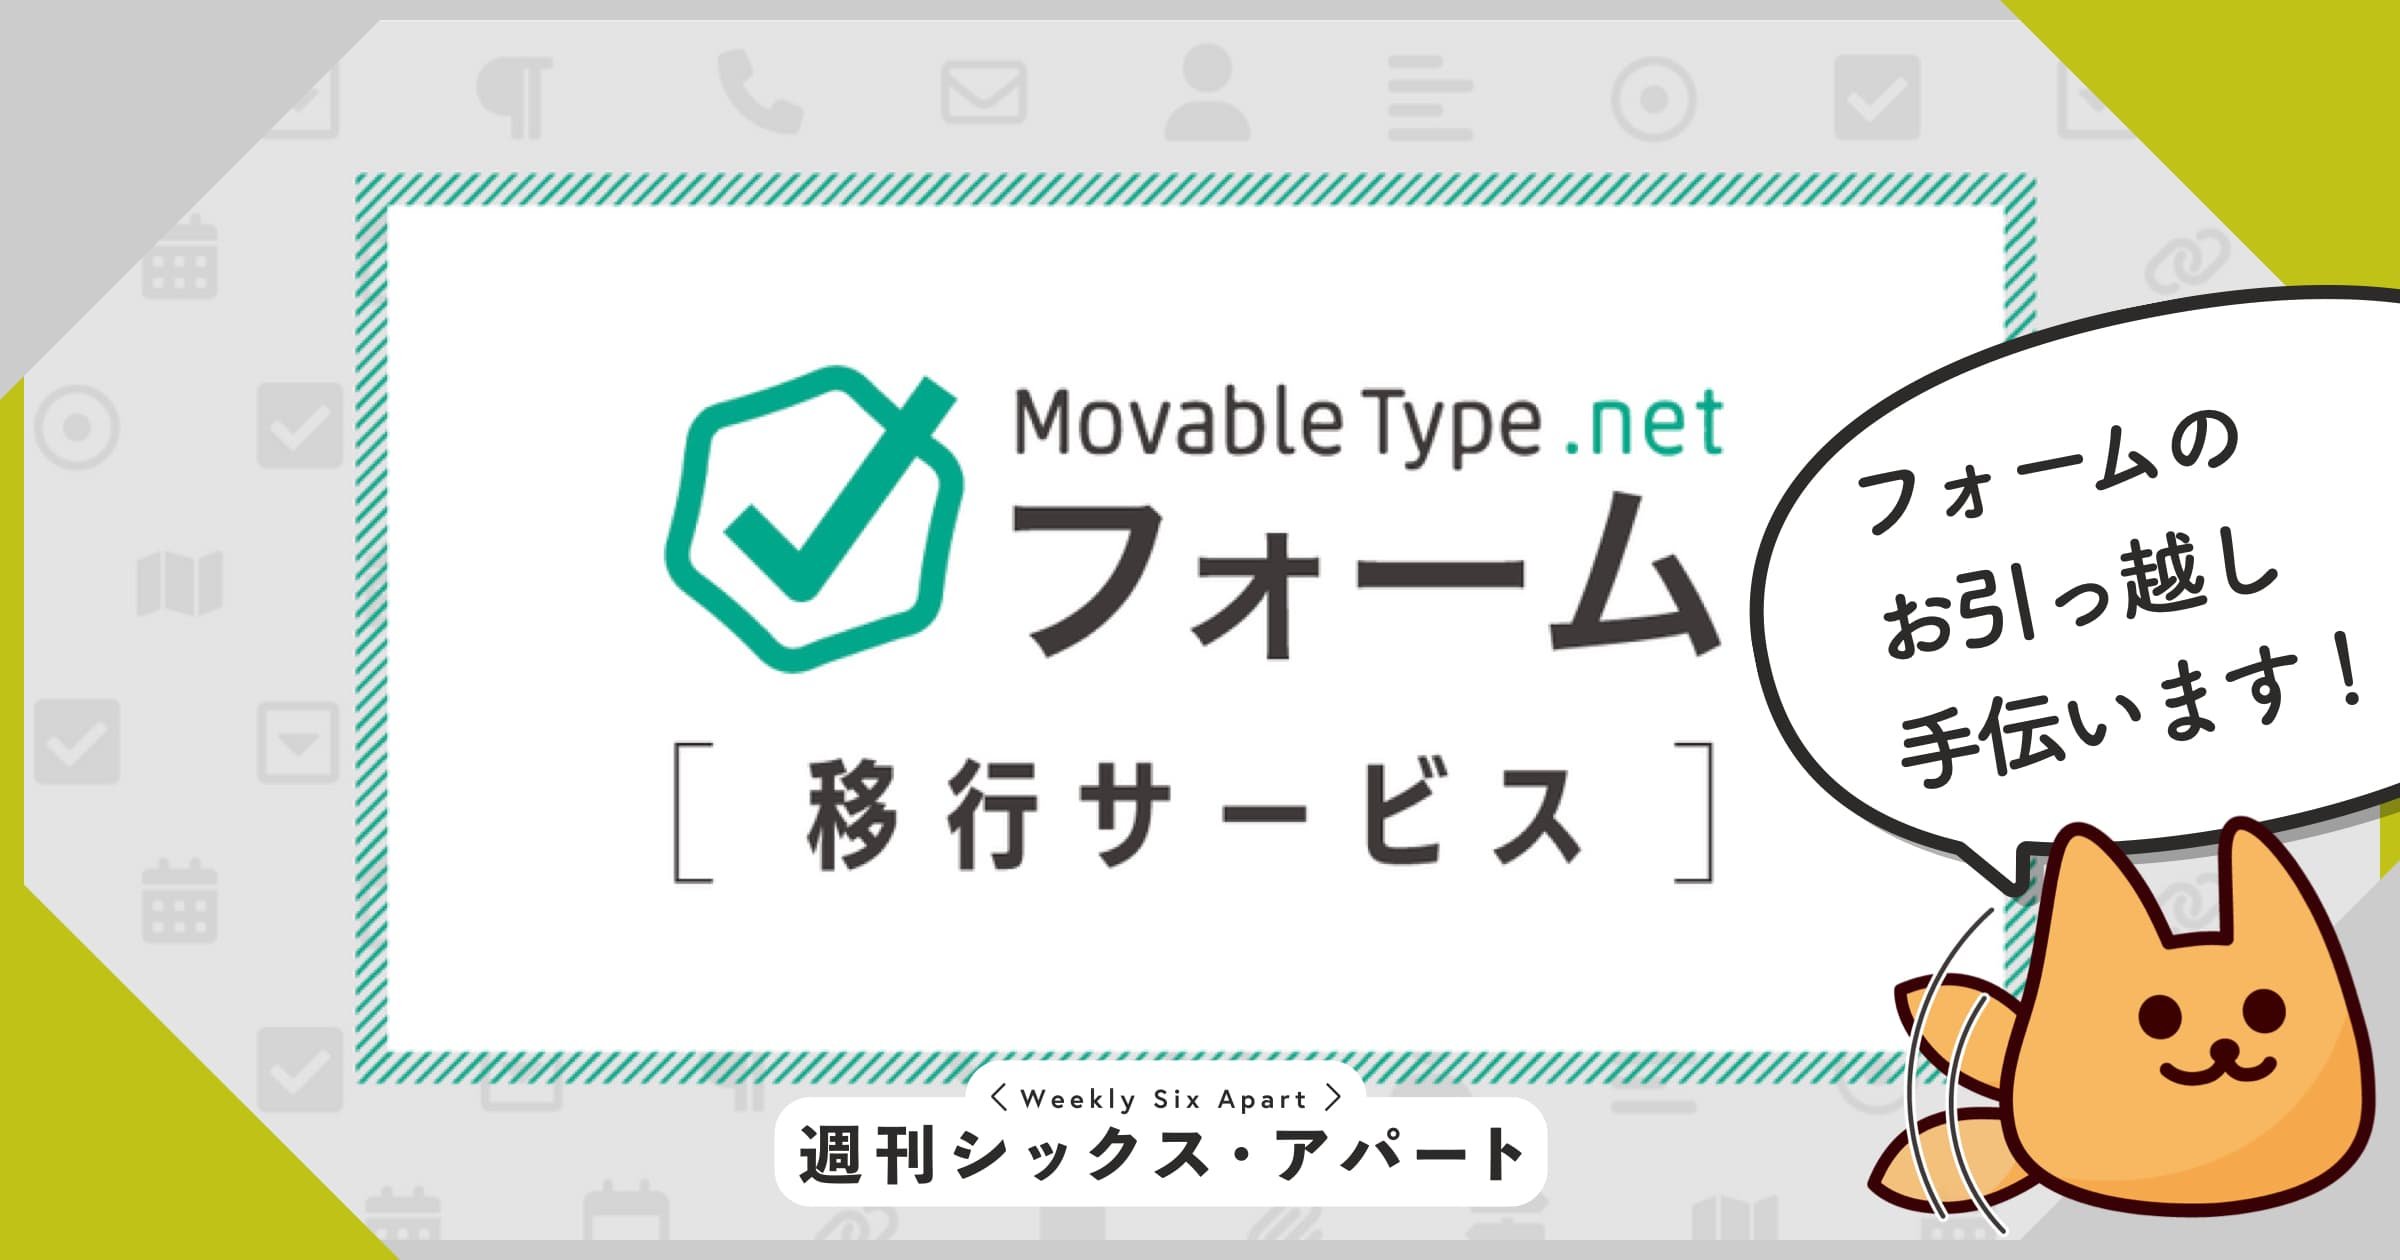 MovableType.net フォーム移行サービスを開始しました #週刊SA